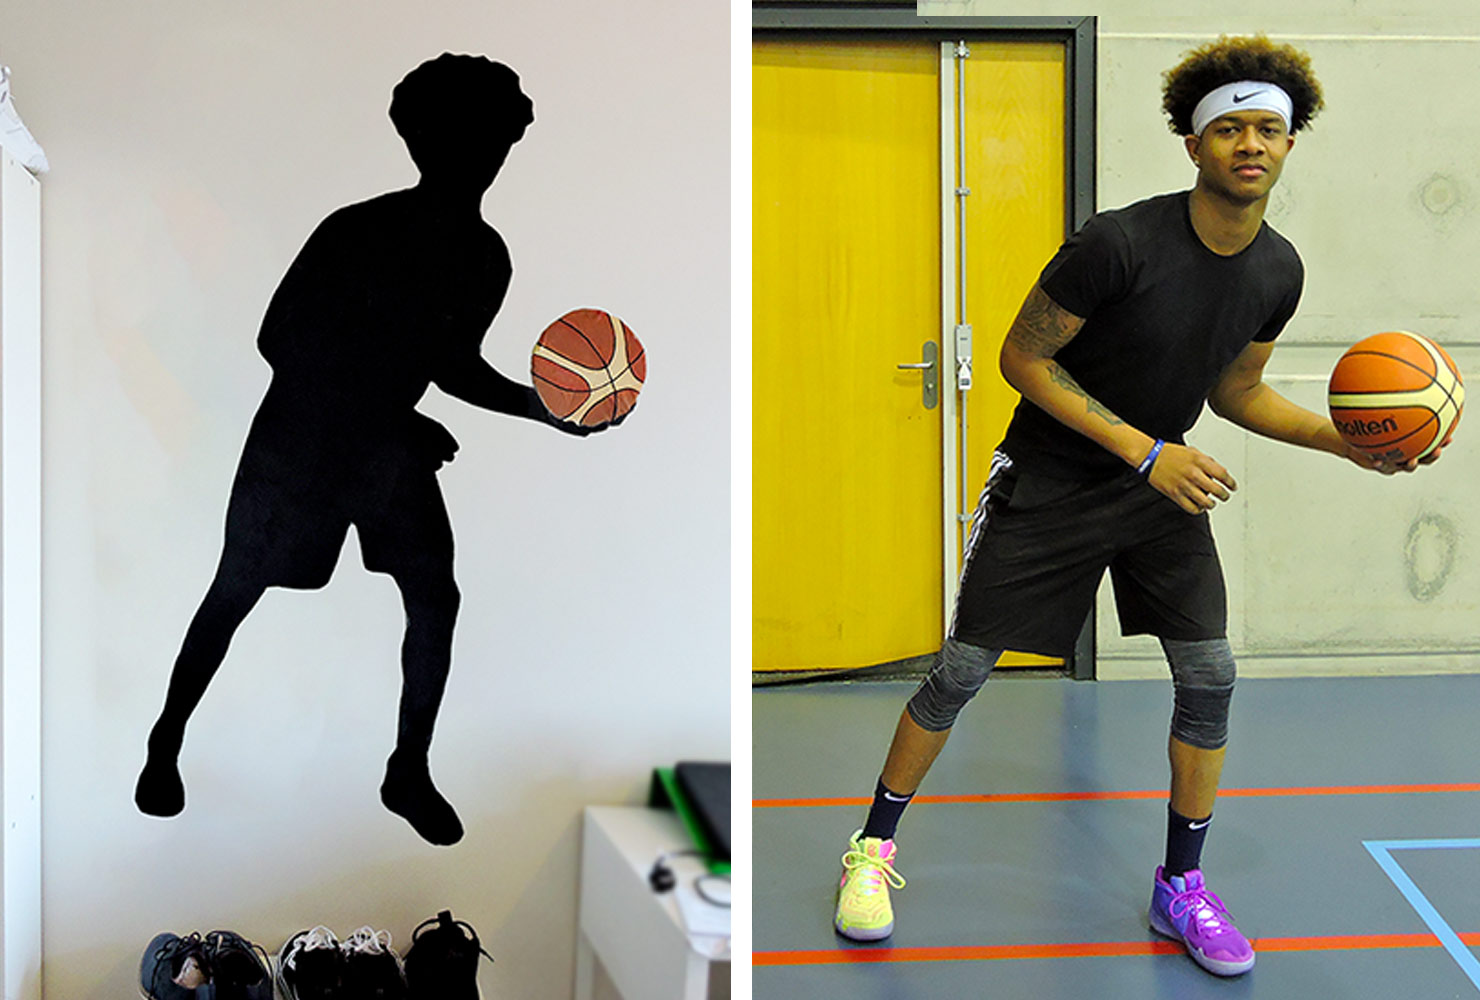 Basketball player silhouette on wall.